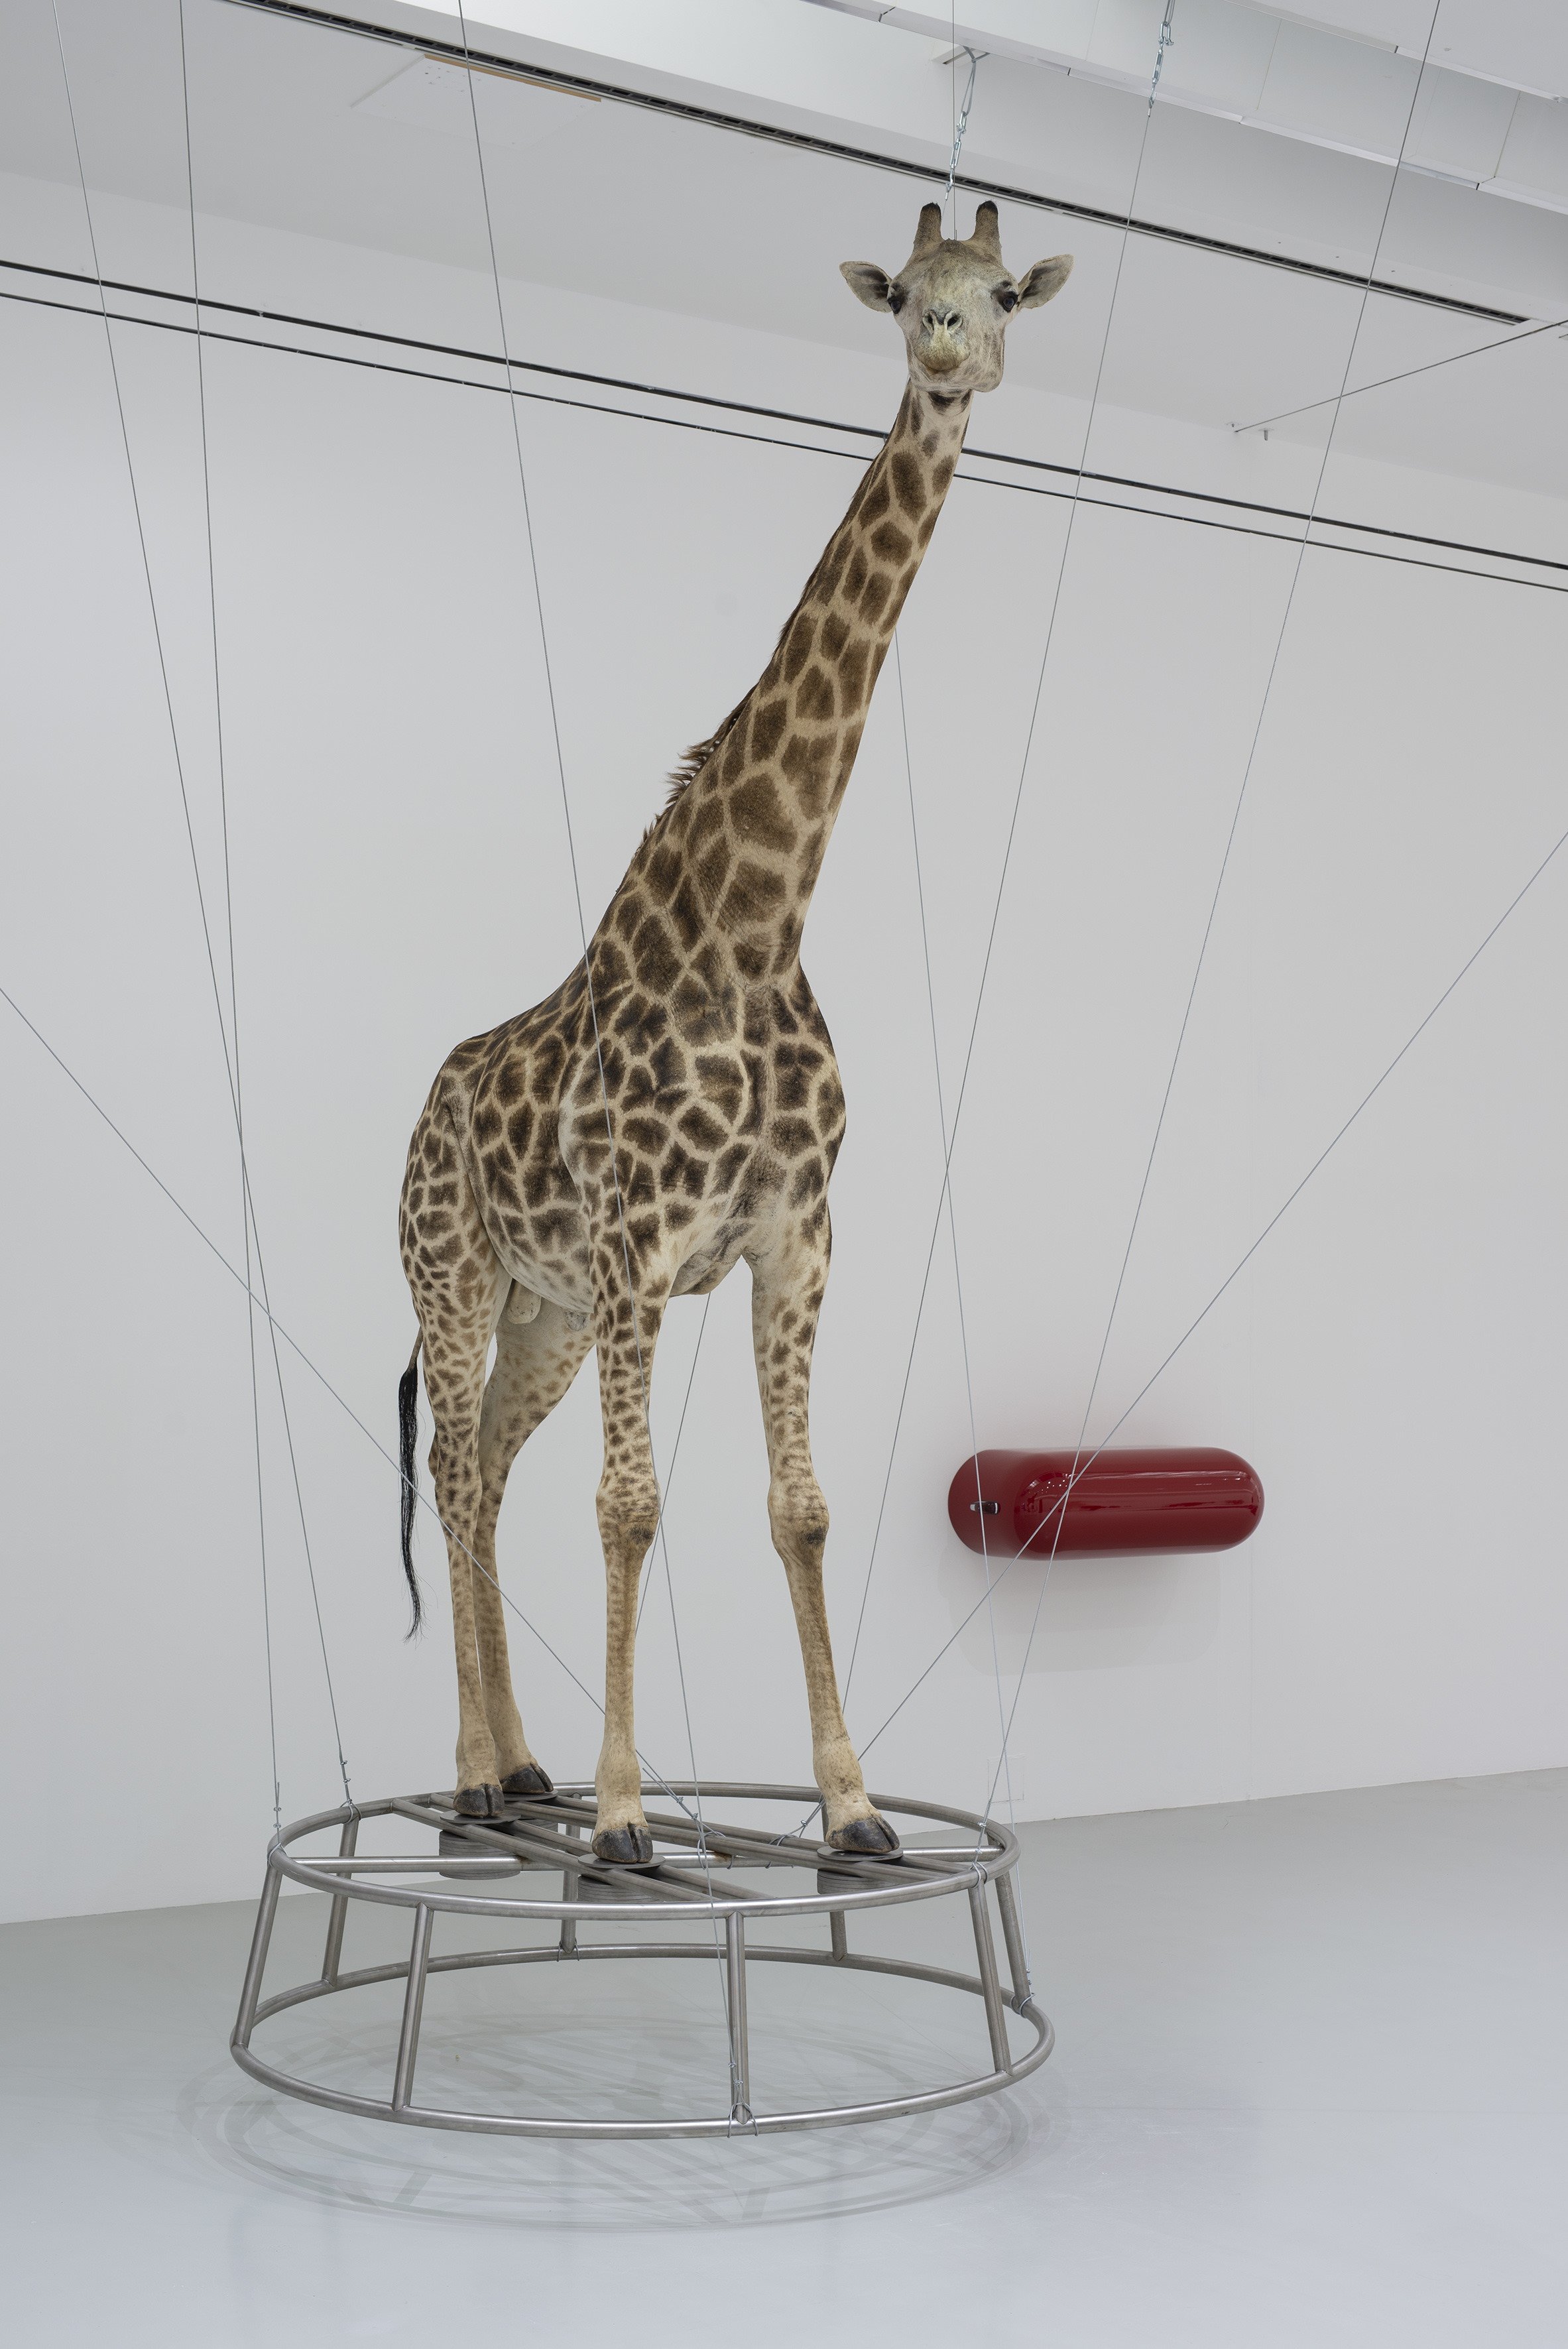 Christiane Möbus, Küsse vom König (Eng. Kisses from the King), 2001/2007, taxidermied giraffe, metal pedestal, wire ropes, 580 x 315 x 250 cm; © Christiane Möbus/VG Bild-Kunst, Bonn 2022, Photo: Herling/Herling/Werner, Sprengel Museum Hanover